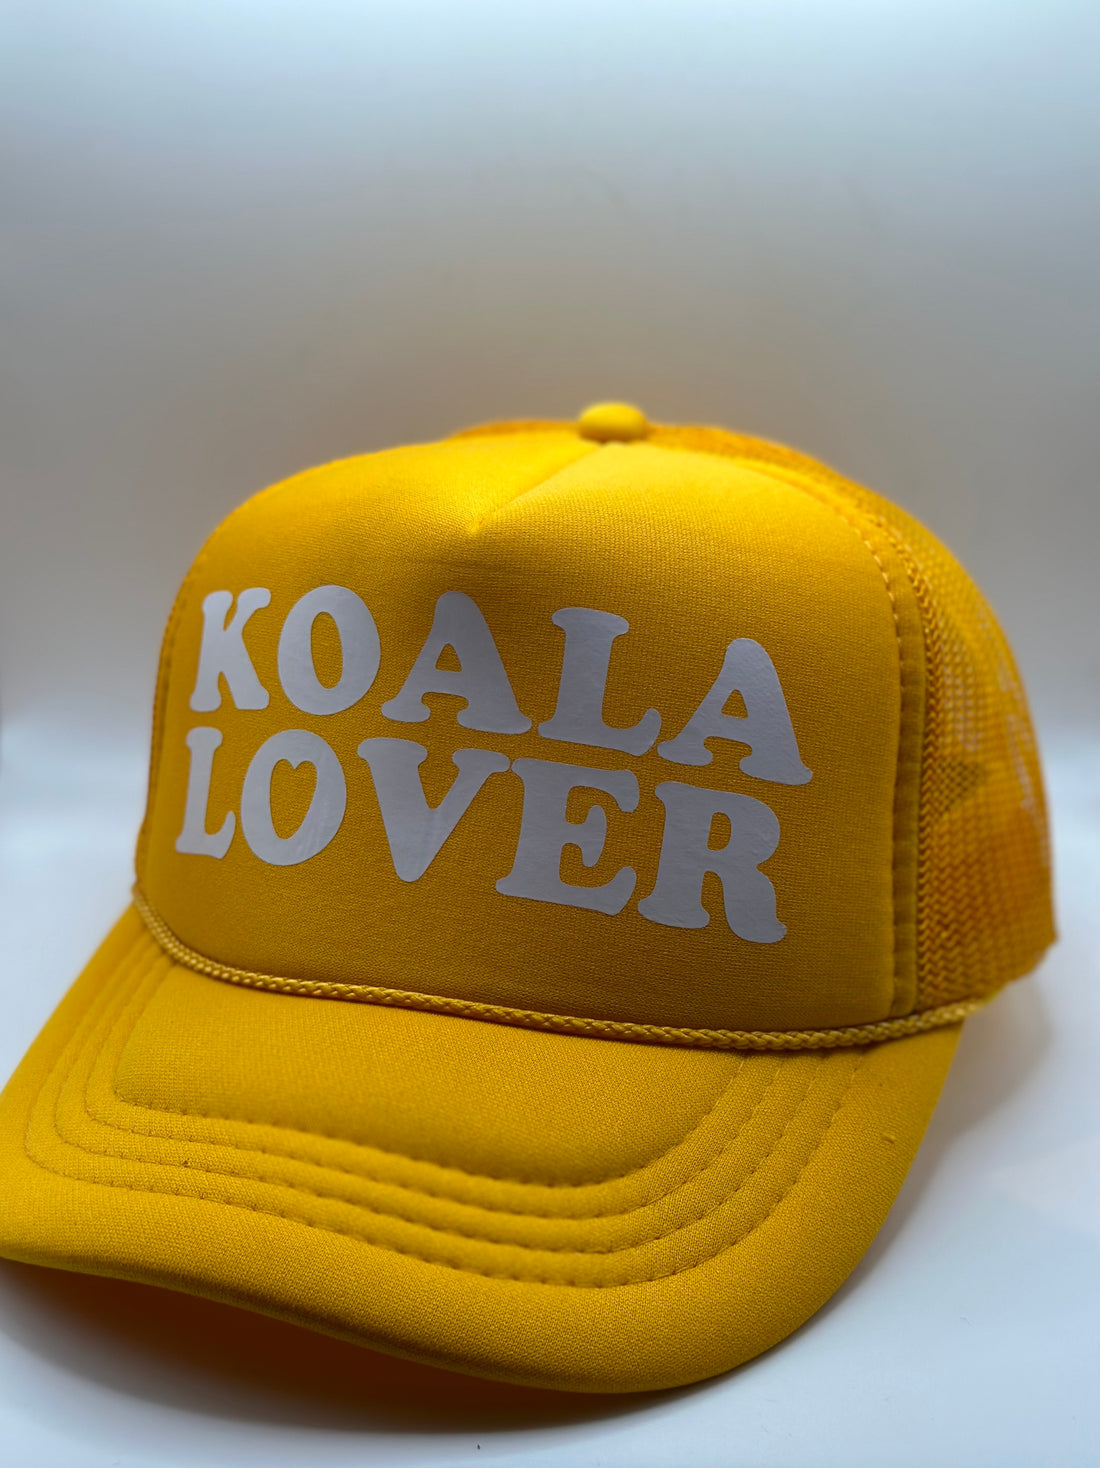 Trucker Caps - Support our Koalas !!